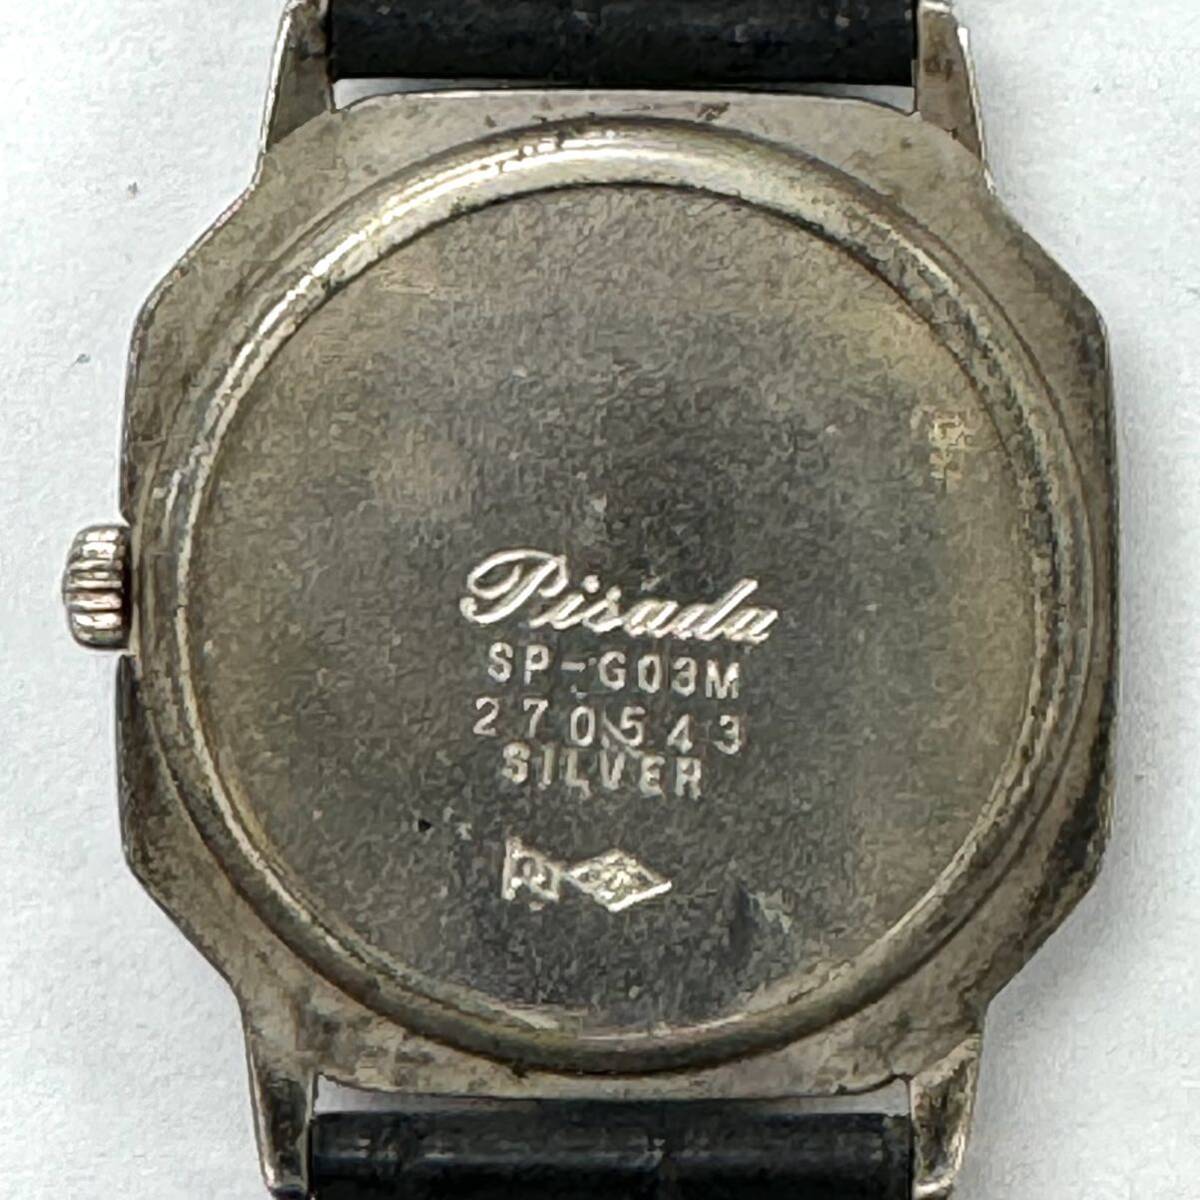 A0043 腕時計 まとめ pisada 270543 BUREN BU-9003M S ジャンク品 中古訳ありの画像9